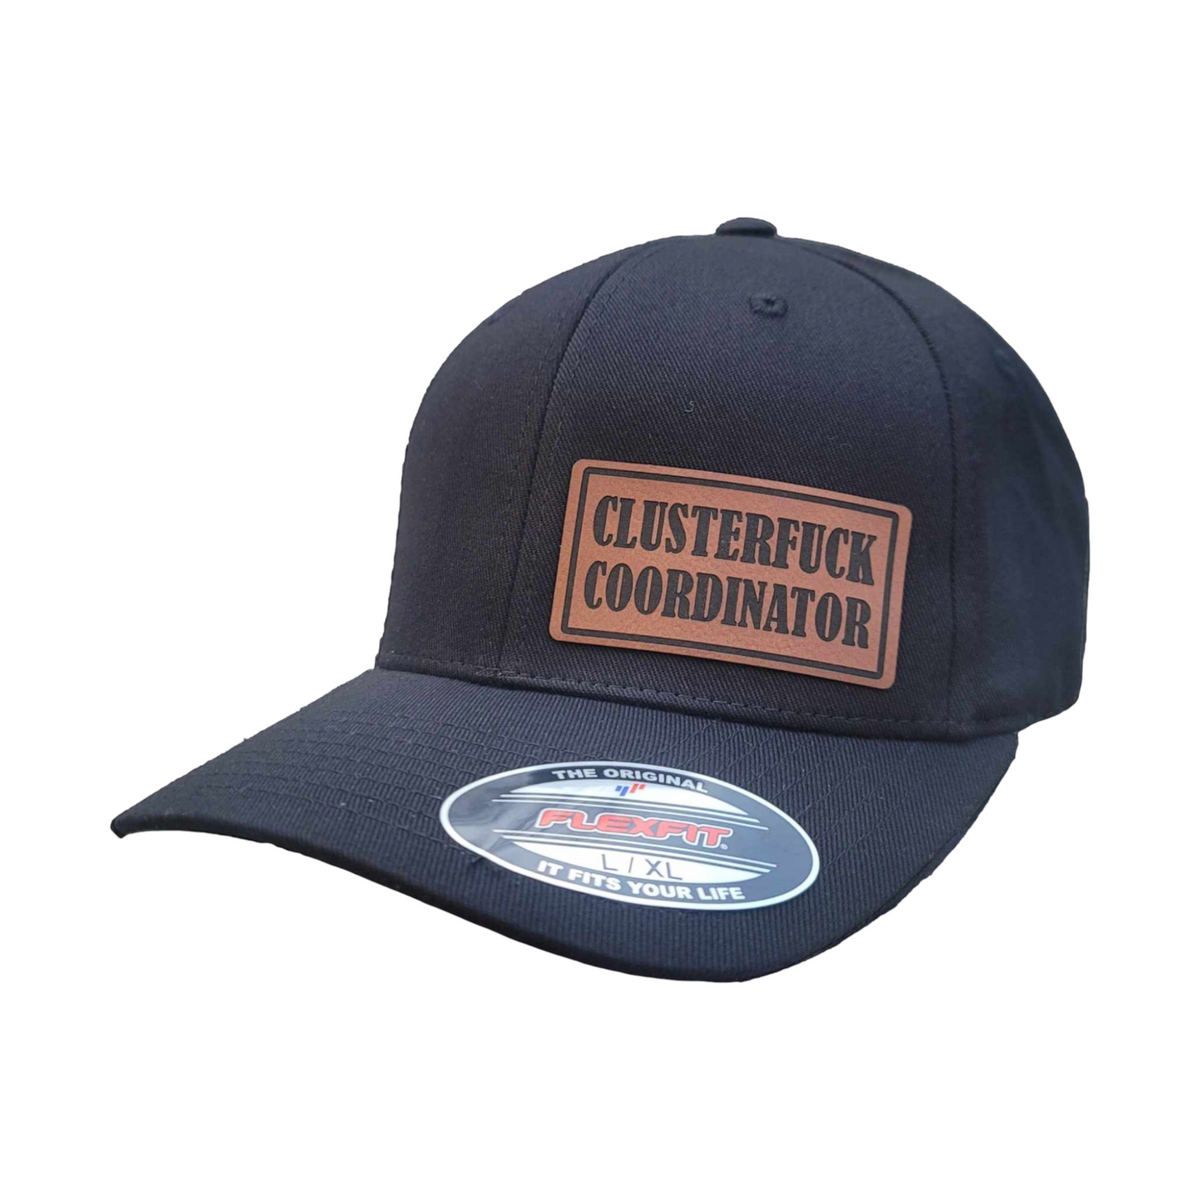 Clusterfuck Coordinator FLEXFIT Patch Hat